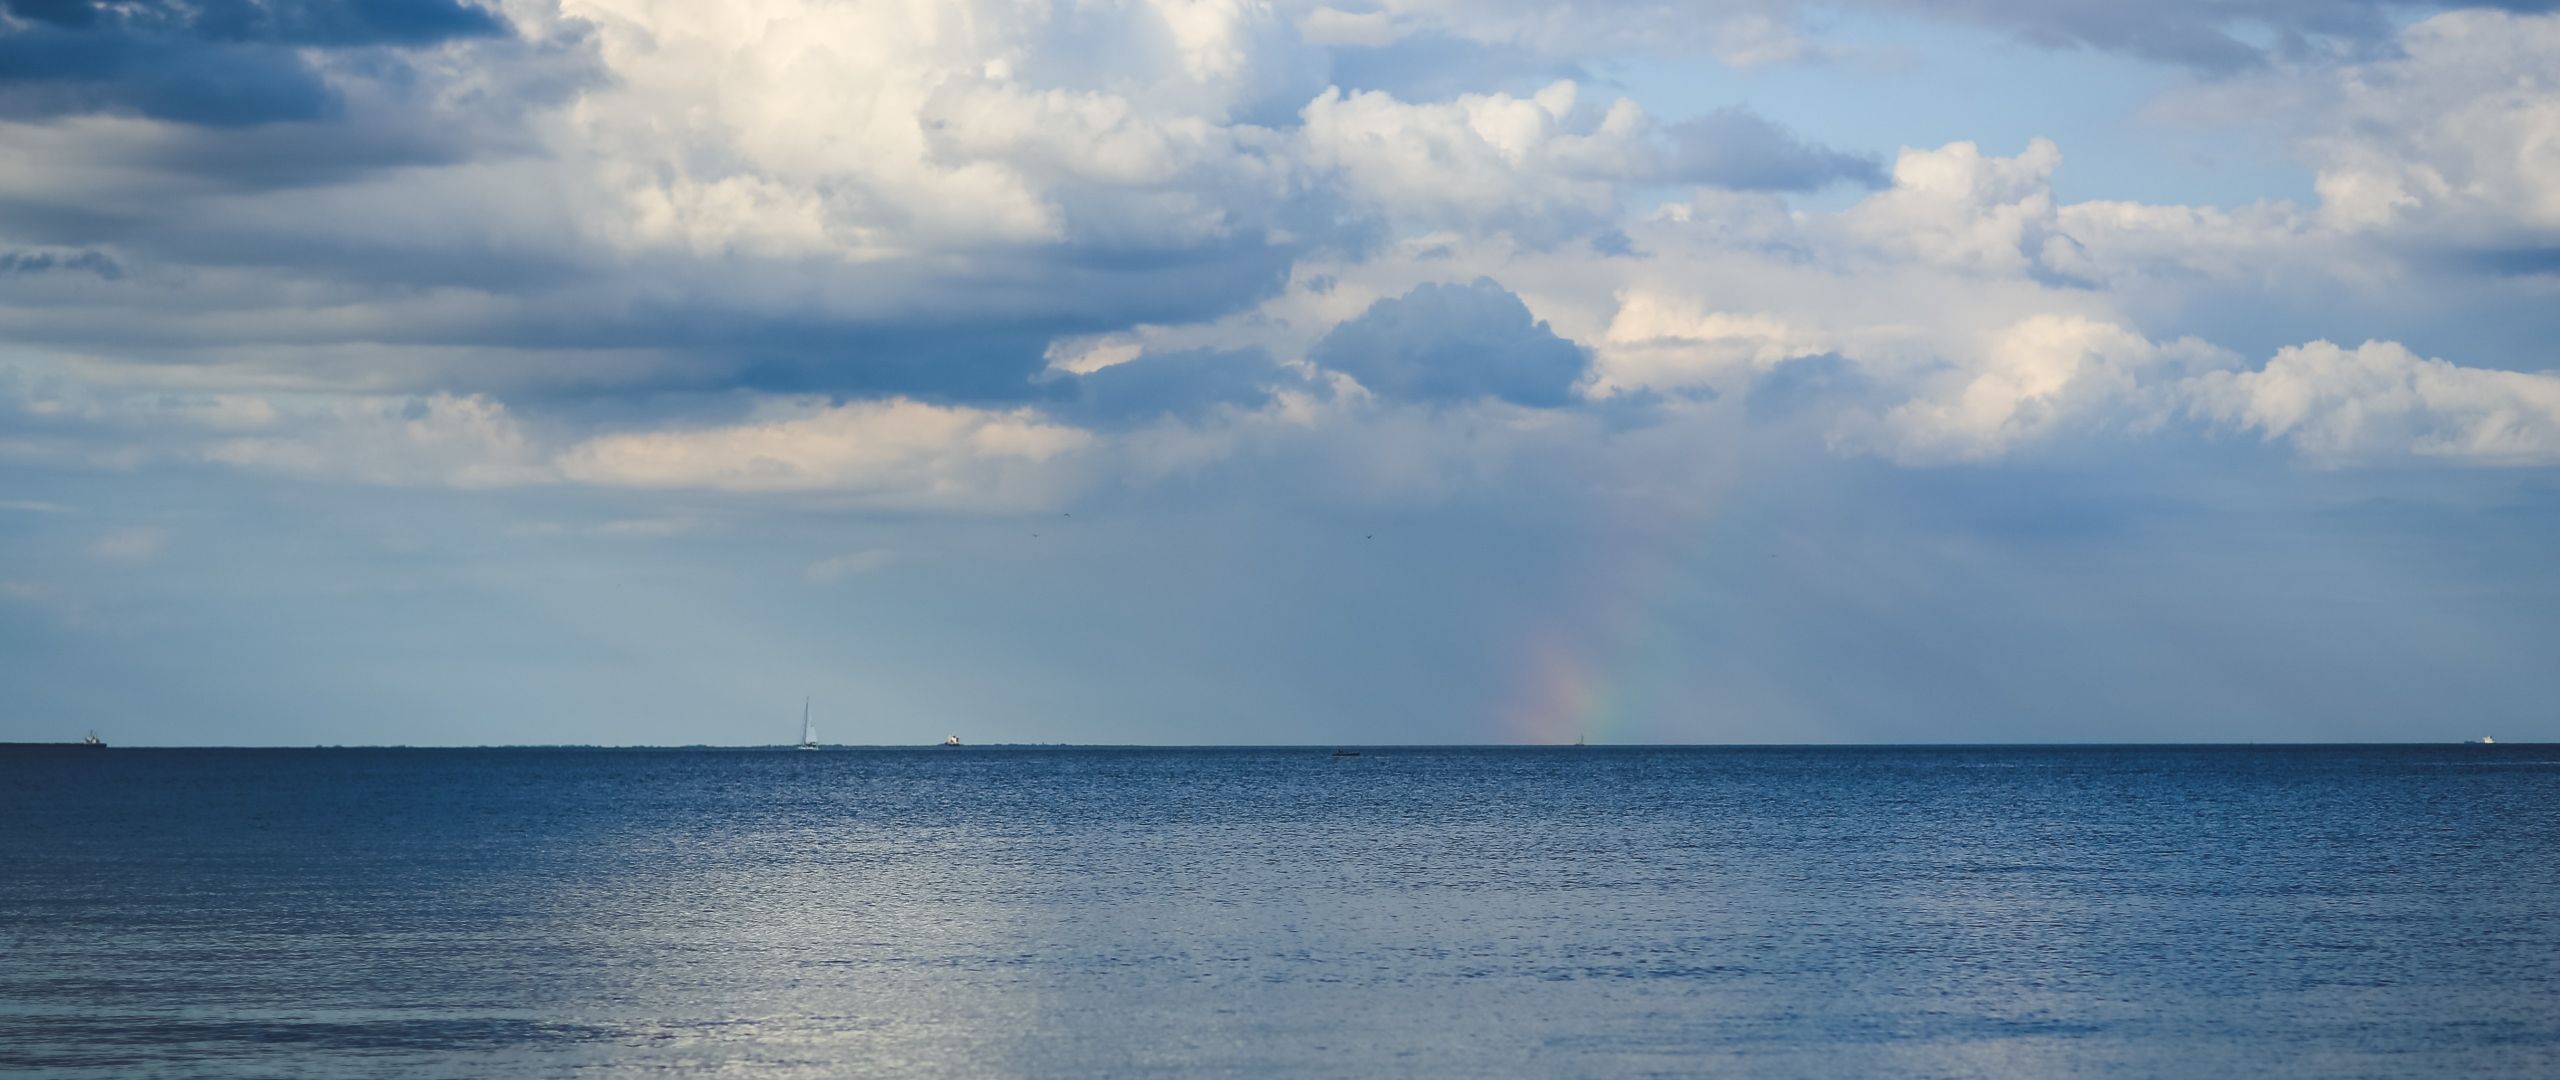 Download Baltic sea, 5k, 4k wallpaper, 8k, horizon, sky, clouds, rainbow Dual Wide display 1080p wallpaper 2560x1080